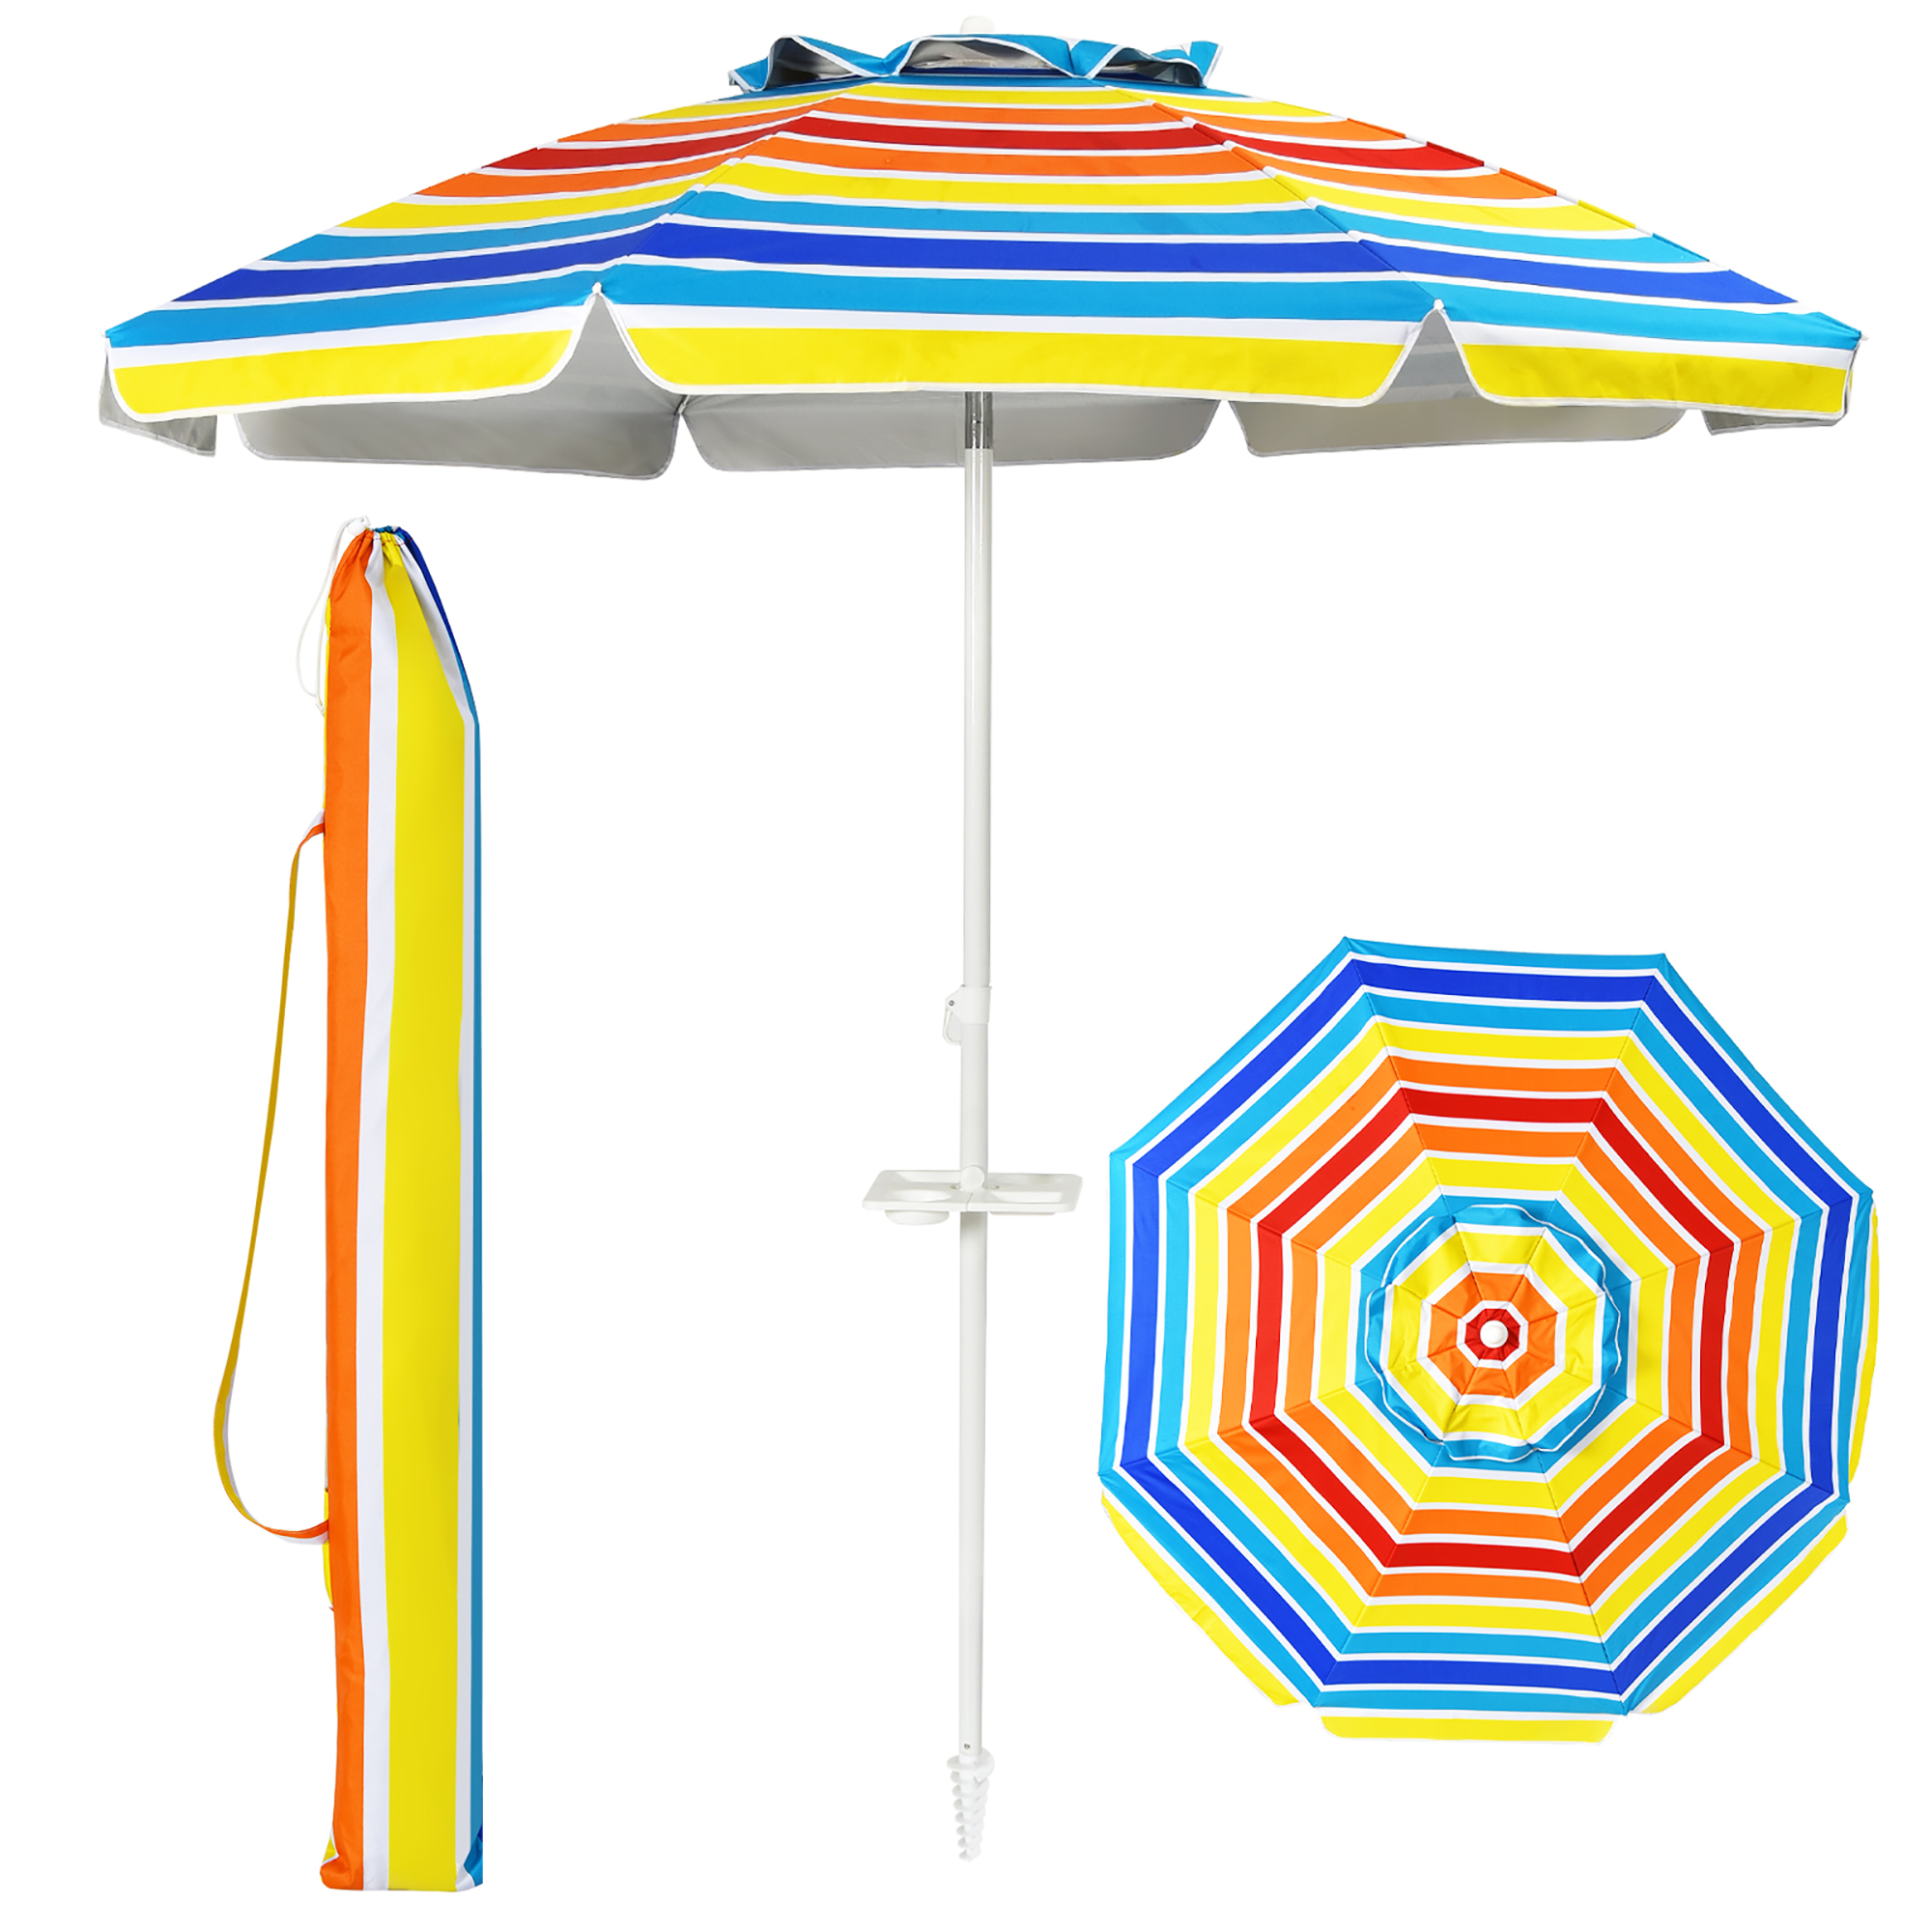 Costway 7.2 FT Portable Beach Umbrella Tilt Sand Anchor Cup Holder W/Carry Bag Rainbow - image 1 of 9